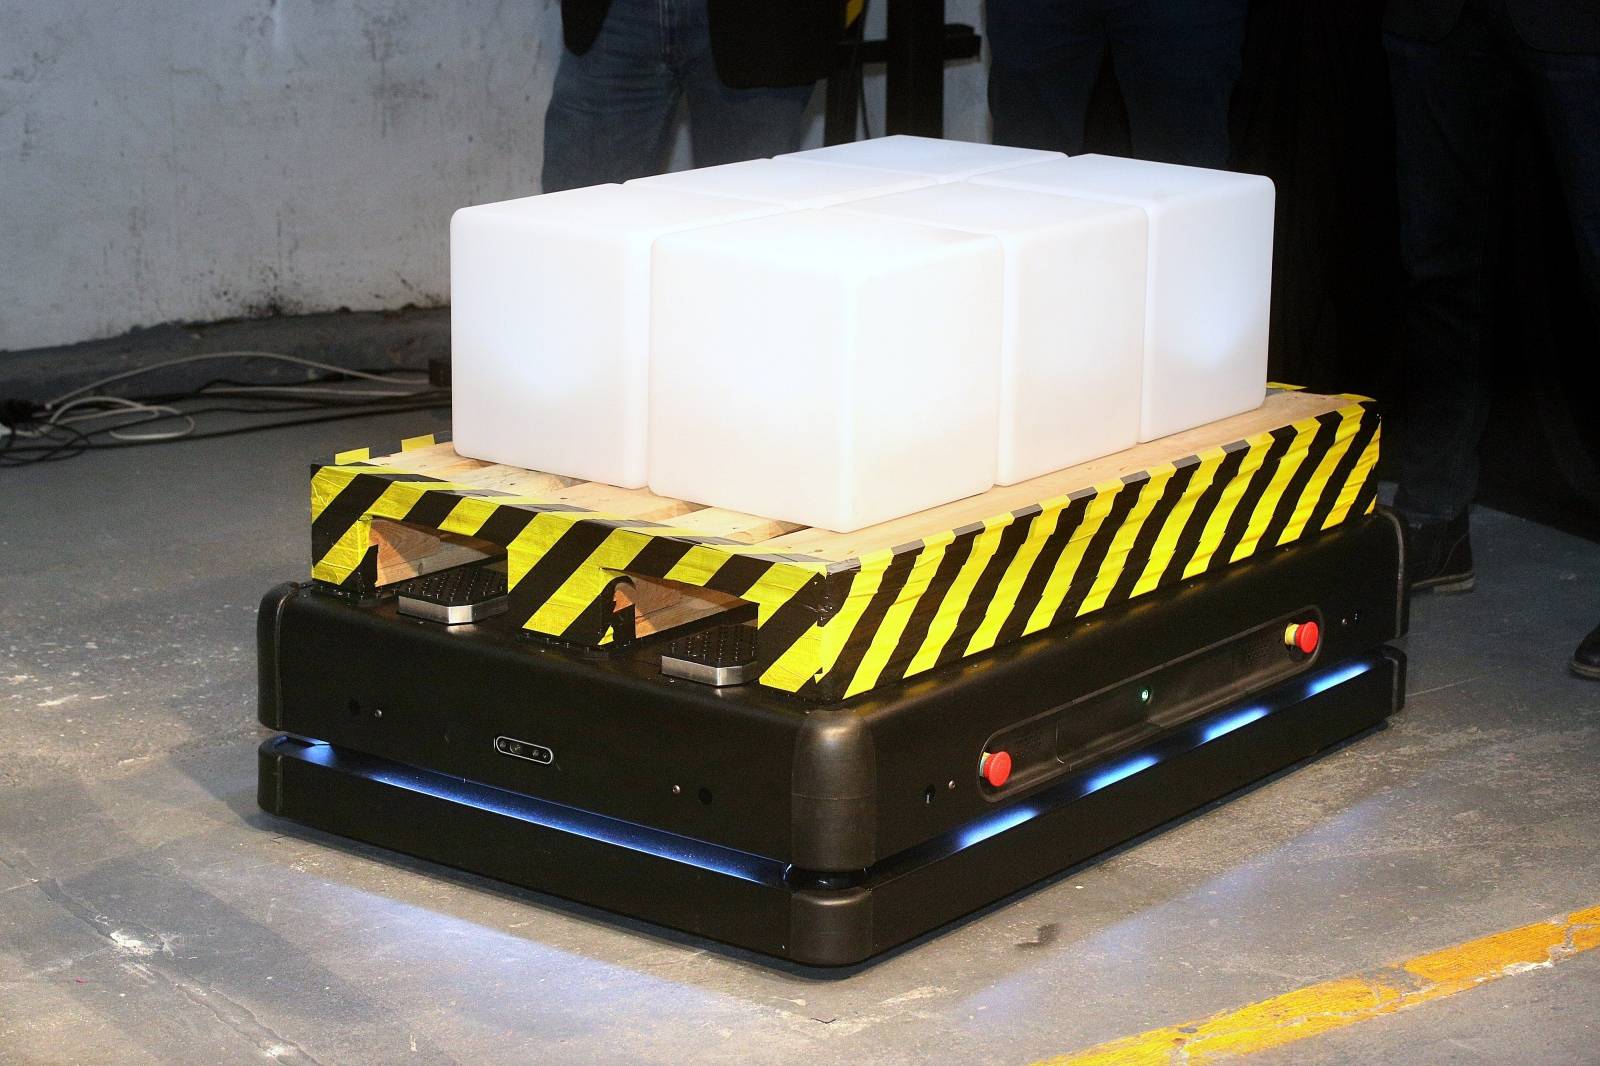 Zagreb: OsjeÄki startup Gideon Brothers predstavili prvog hrvatskog industrijskog robota